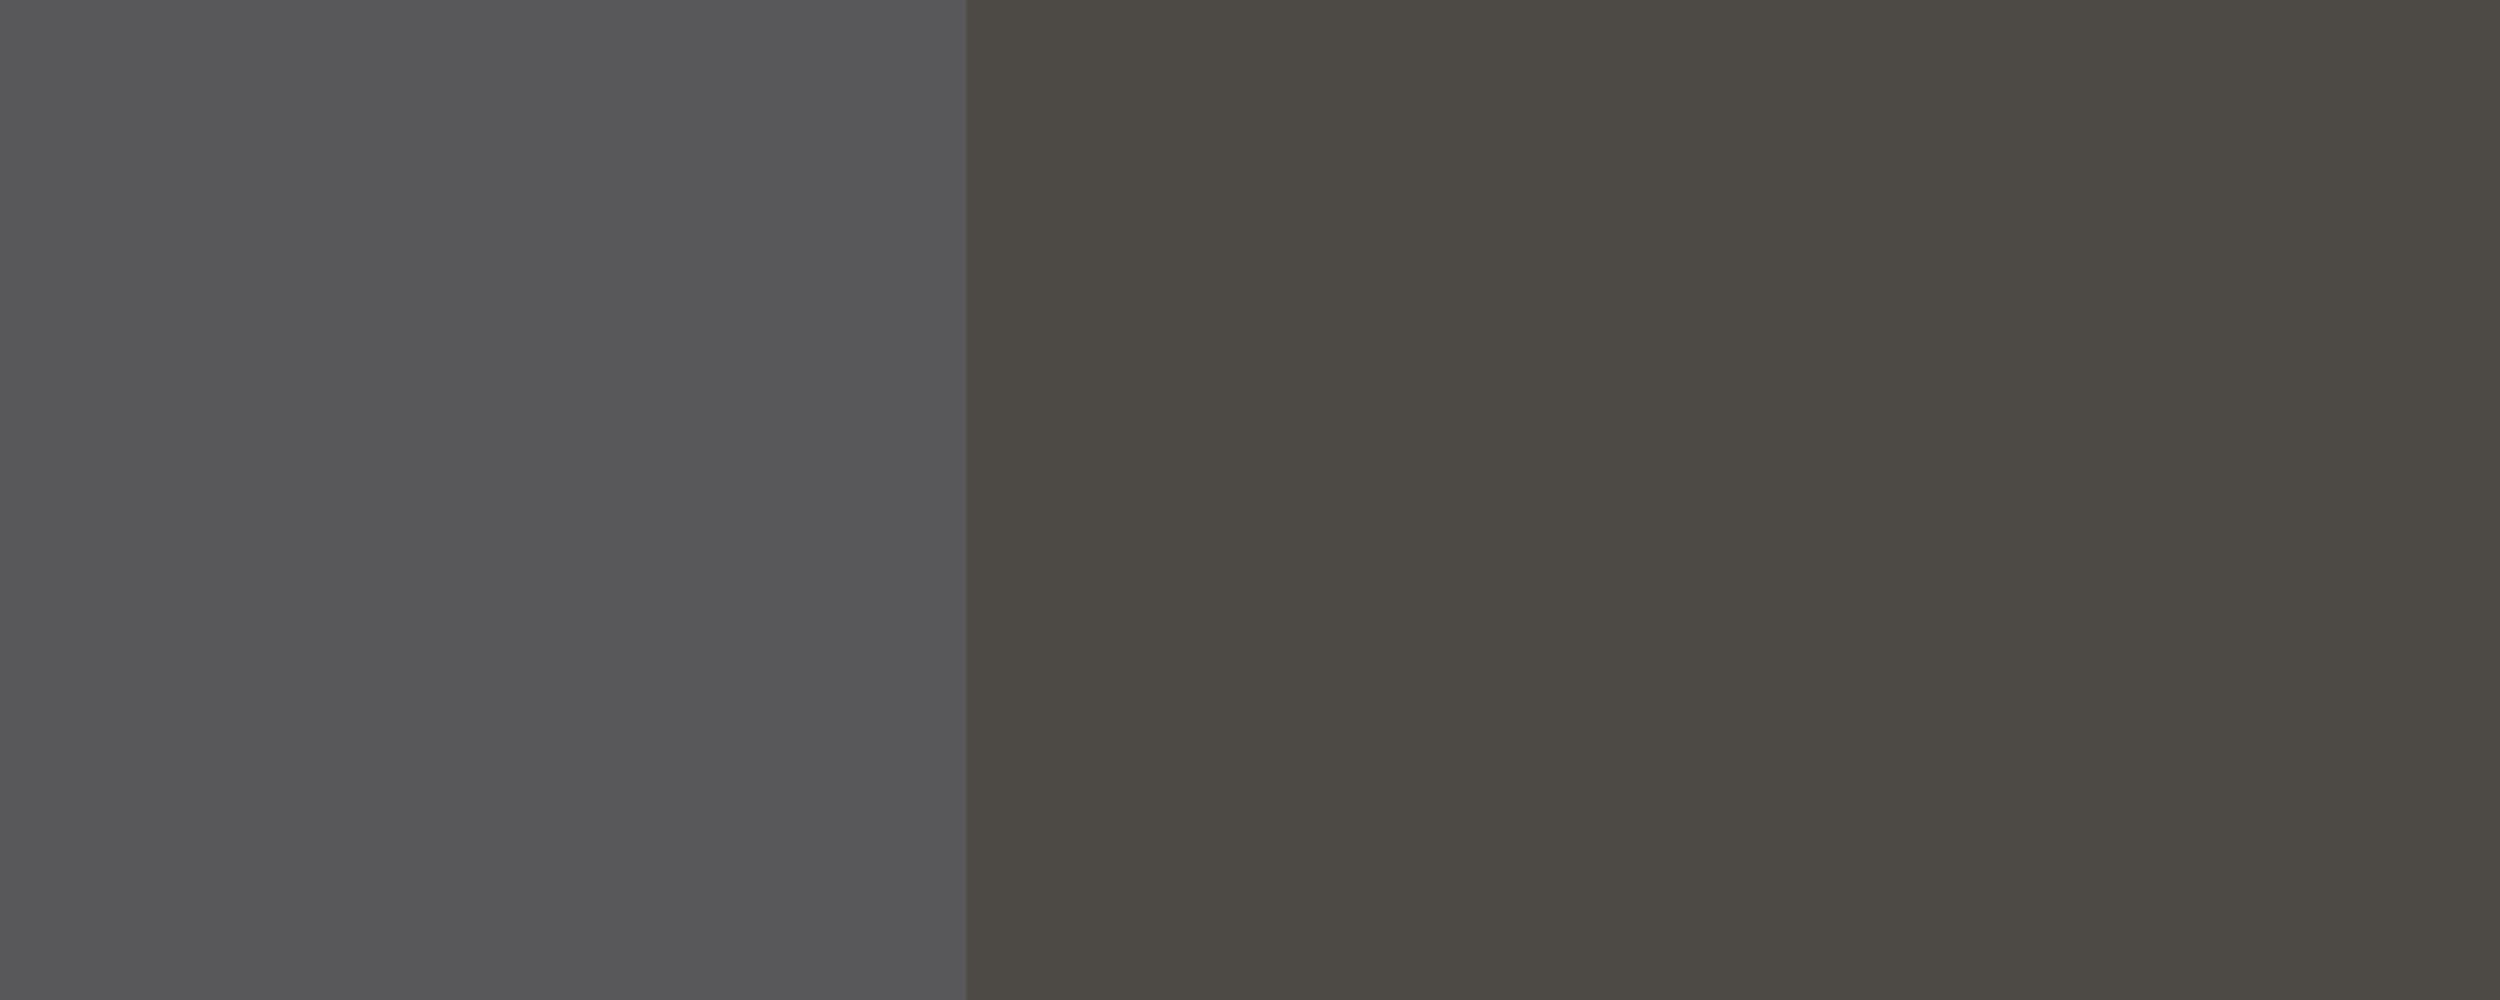 7022 und umbragrau Feldmann-Wohnen 45cm Sockelblende matt teilintegriert Front- Sockelfarbe RAL Amaro, wählbar